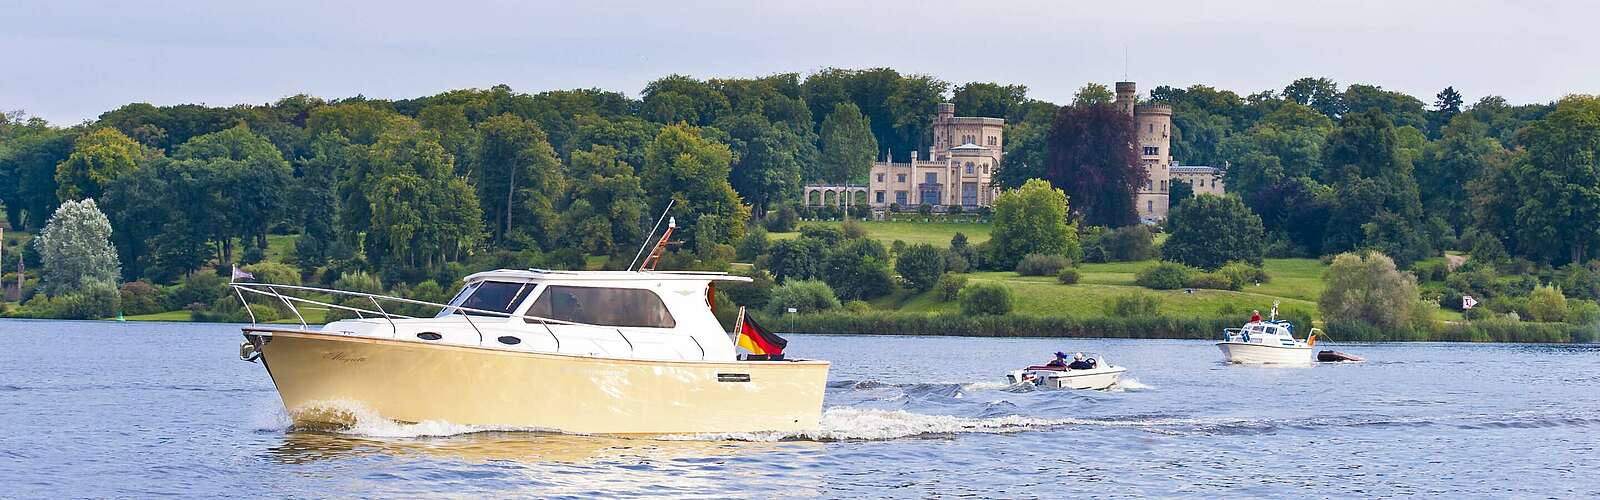 Bootfahrer auf der Havel vor Schloss Babelsberg,
        
    

        Foto: TMB-Fotoarchiv/Yorck Maecke